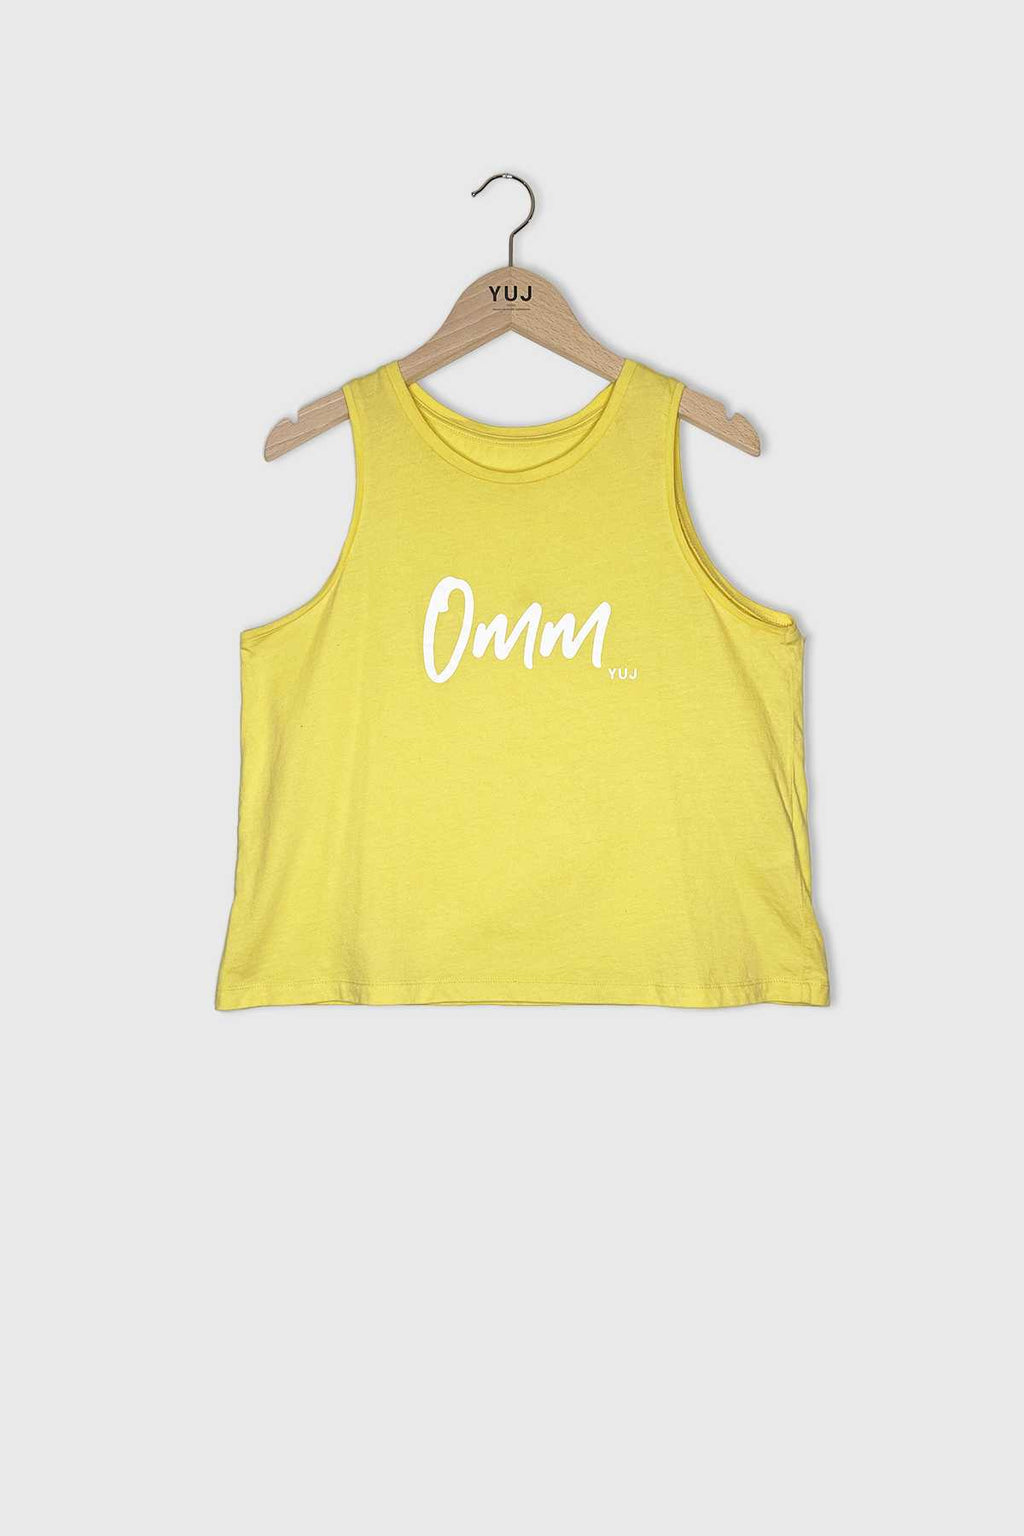 #394 - OMM Camiseta de Tirantes Amarilla // Talla S YUJ - House of Mindfulness